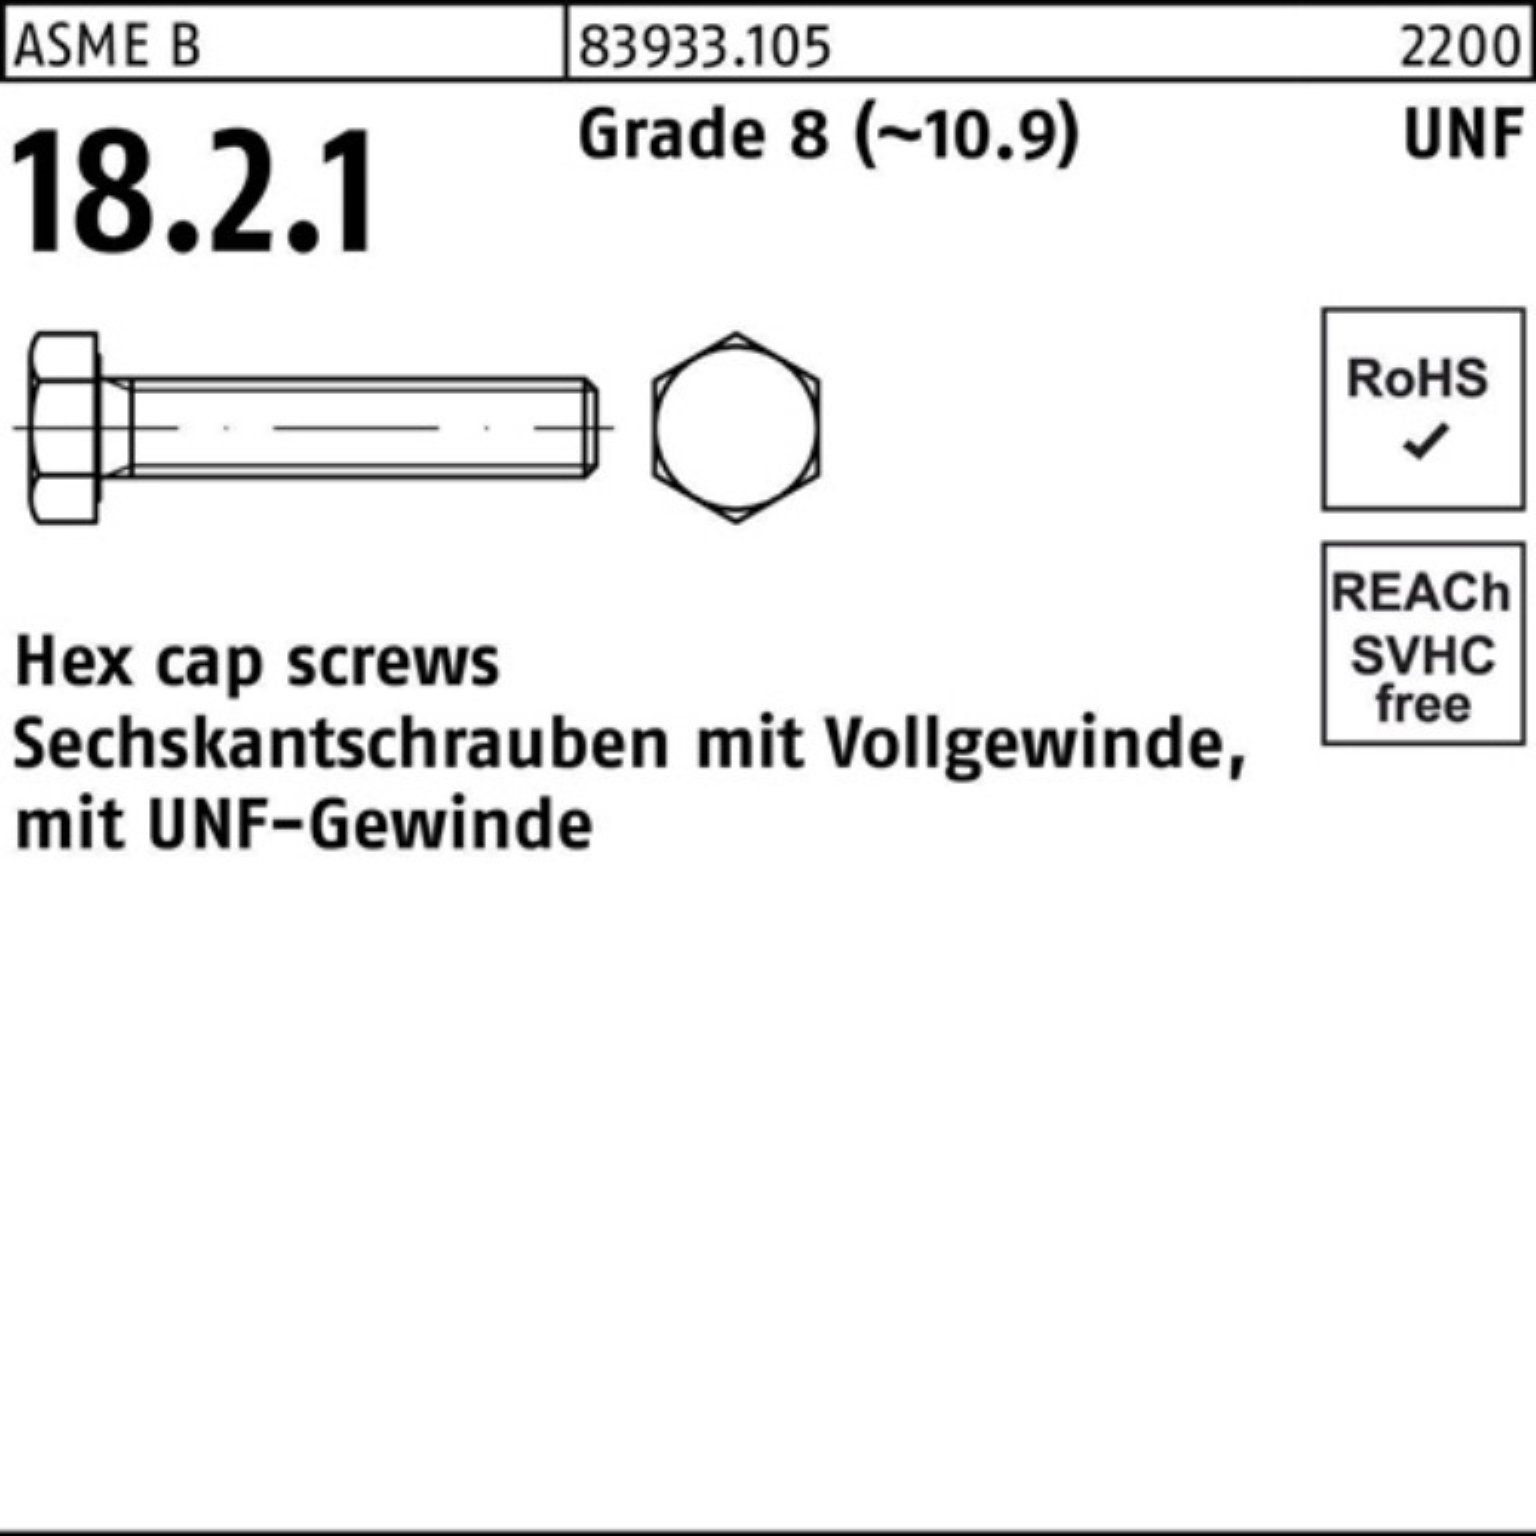 Reyher Sechskantschraube 100er Pack Sechskantschraube R 83933 UNF-Gewinde VG 3/4x 1 1/2 Grade 8